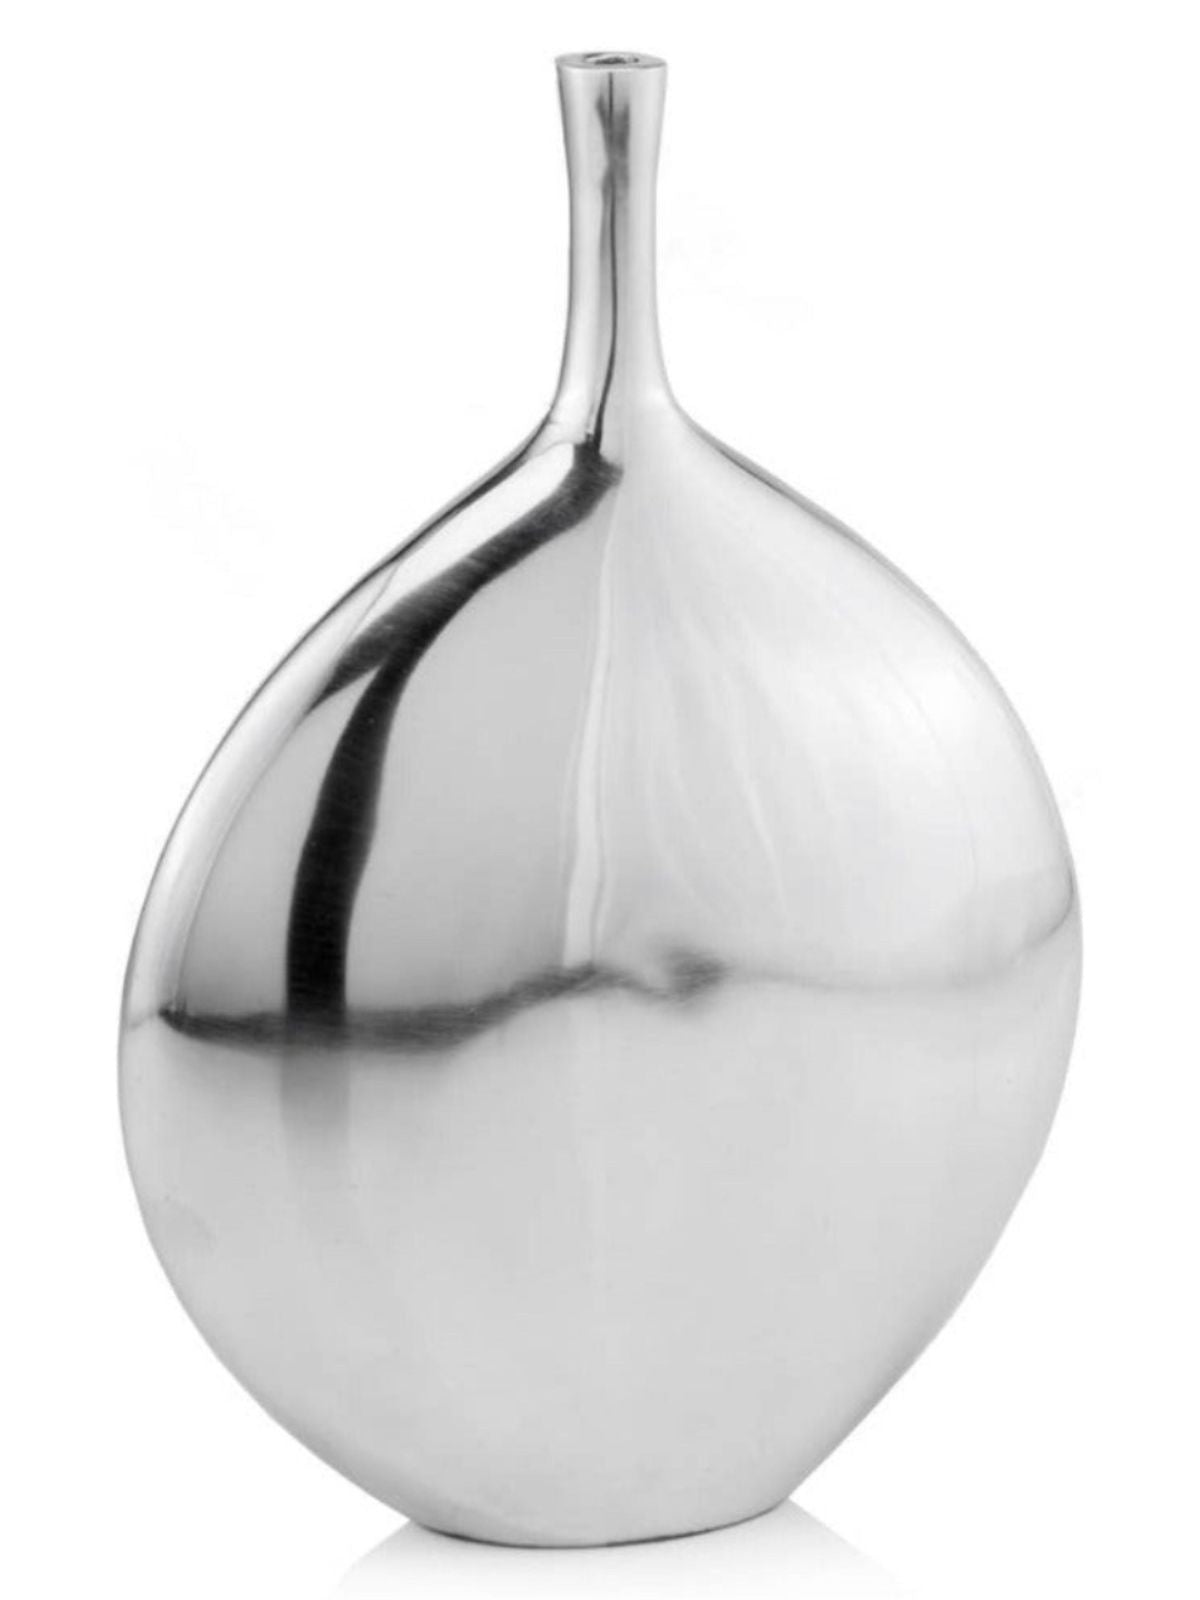 Silver Round Metallic Designer Vase with Narrow Long Neck - Large